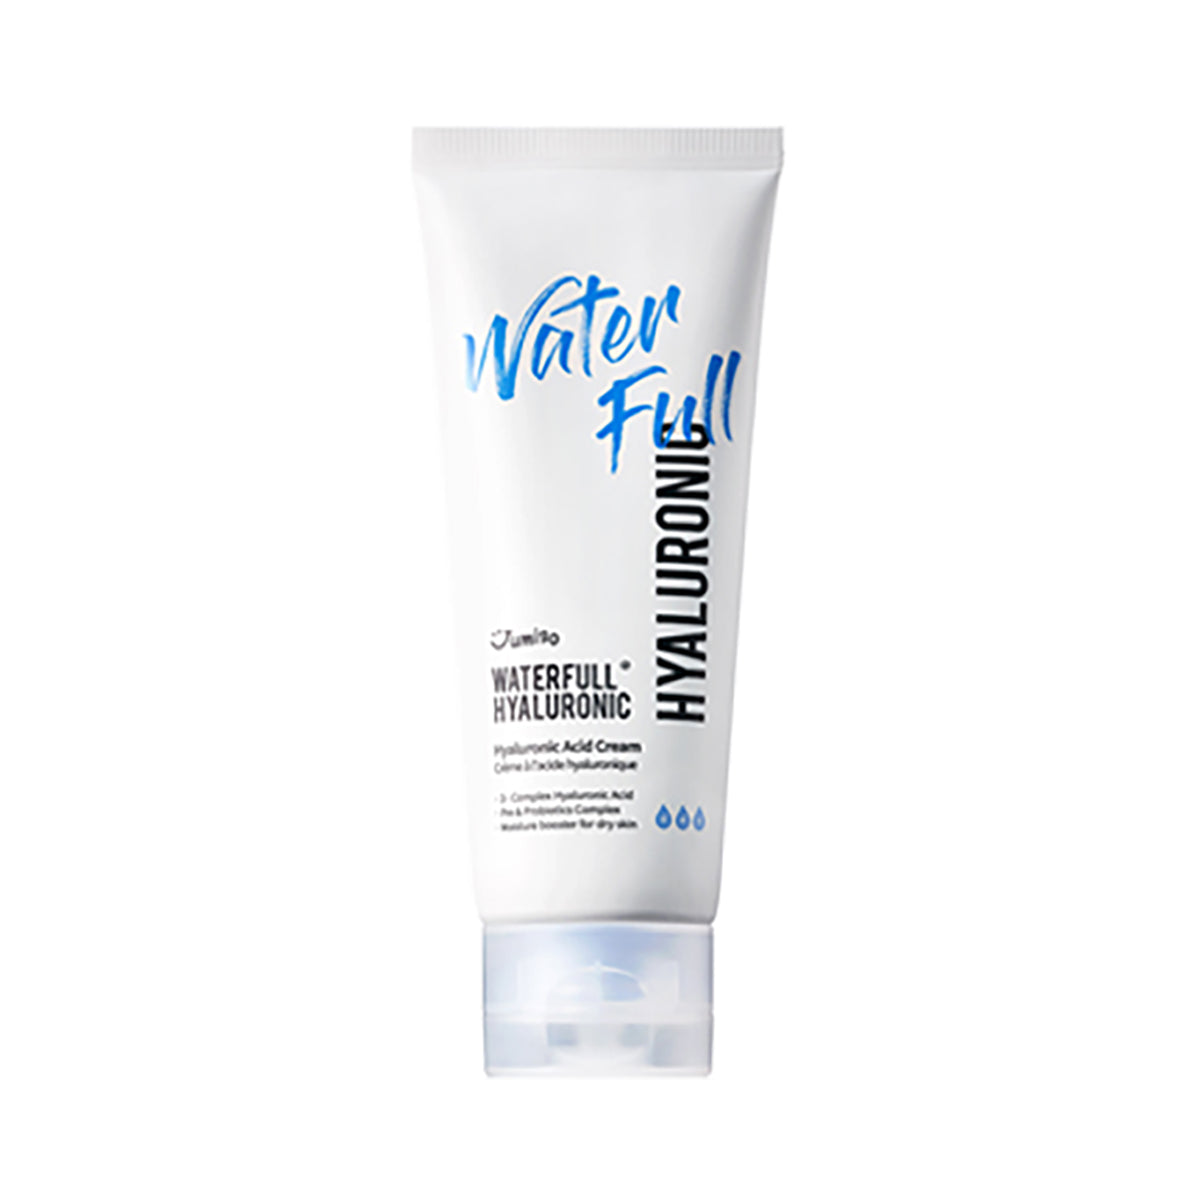 Waterfull Hyaluronic Cream [Jumbo Size]